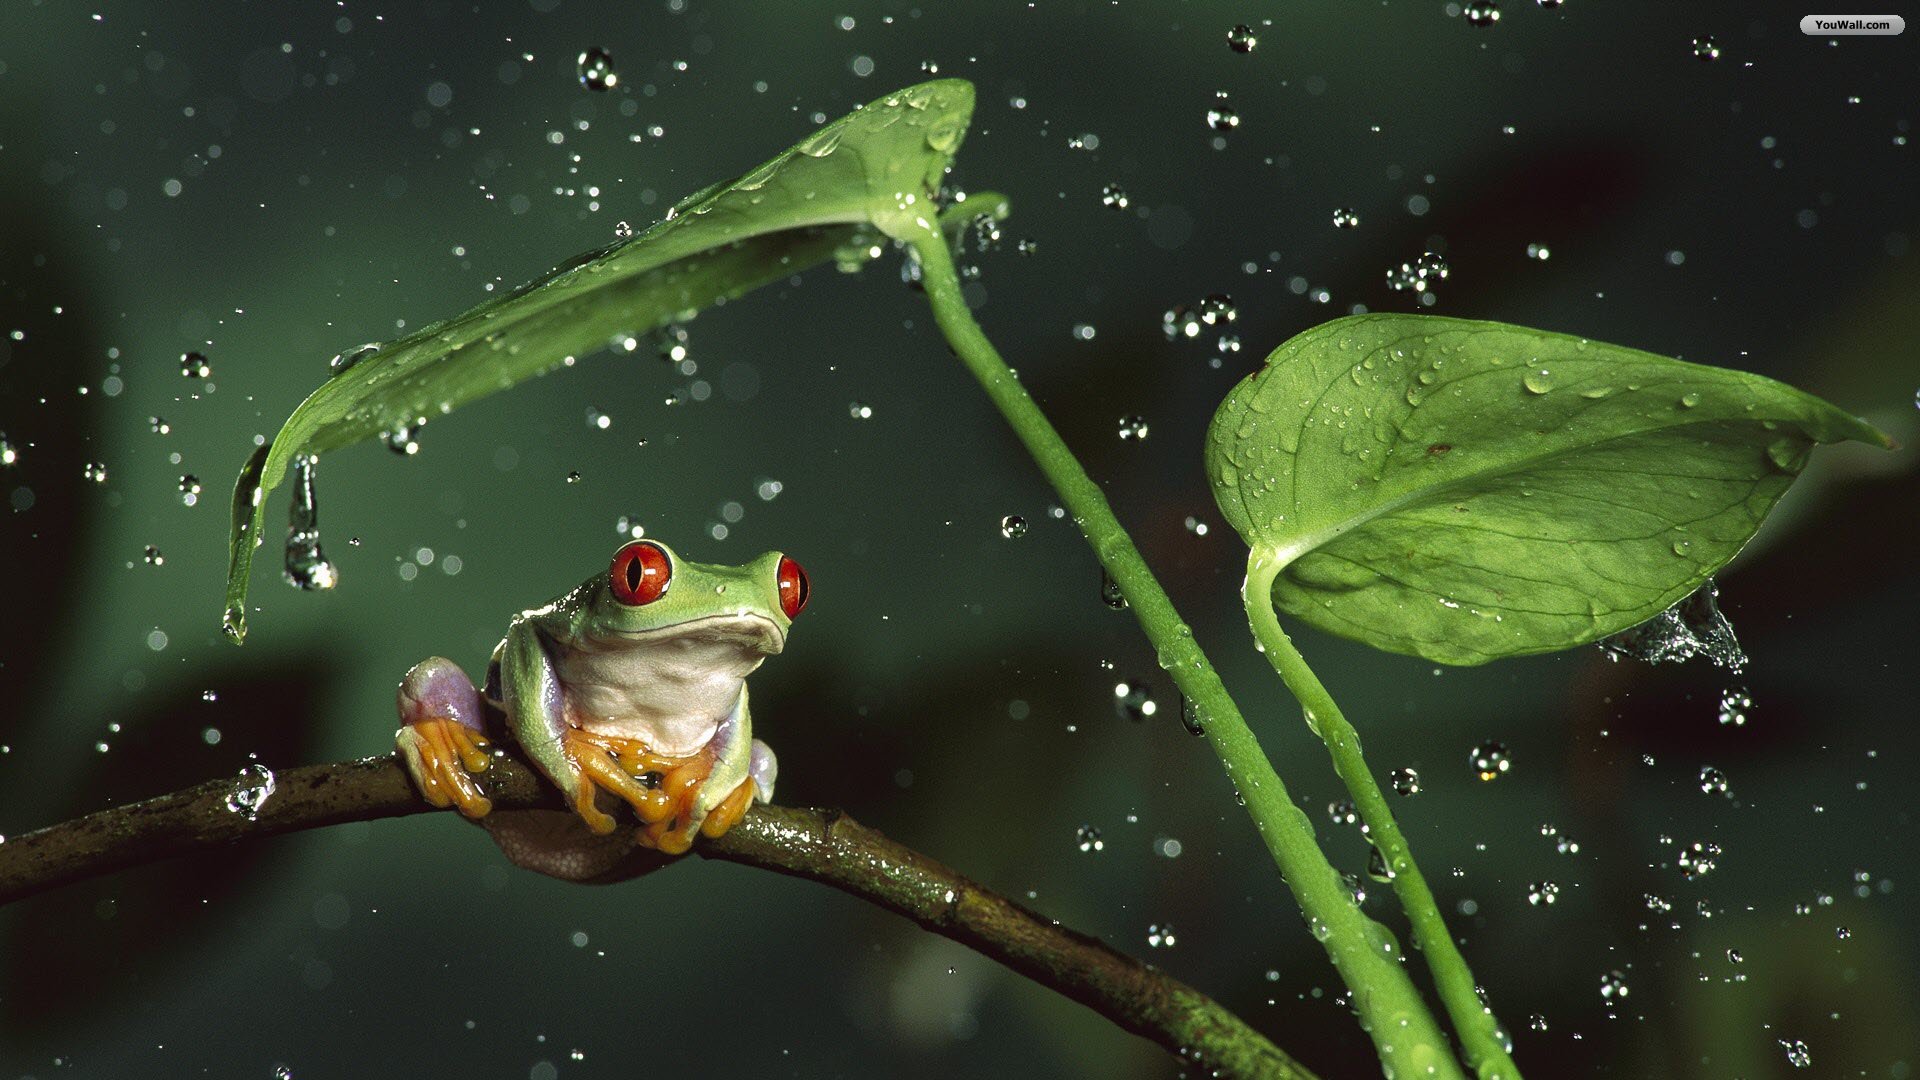 Under Rain Wallpaper HD Green Frog